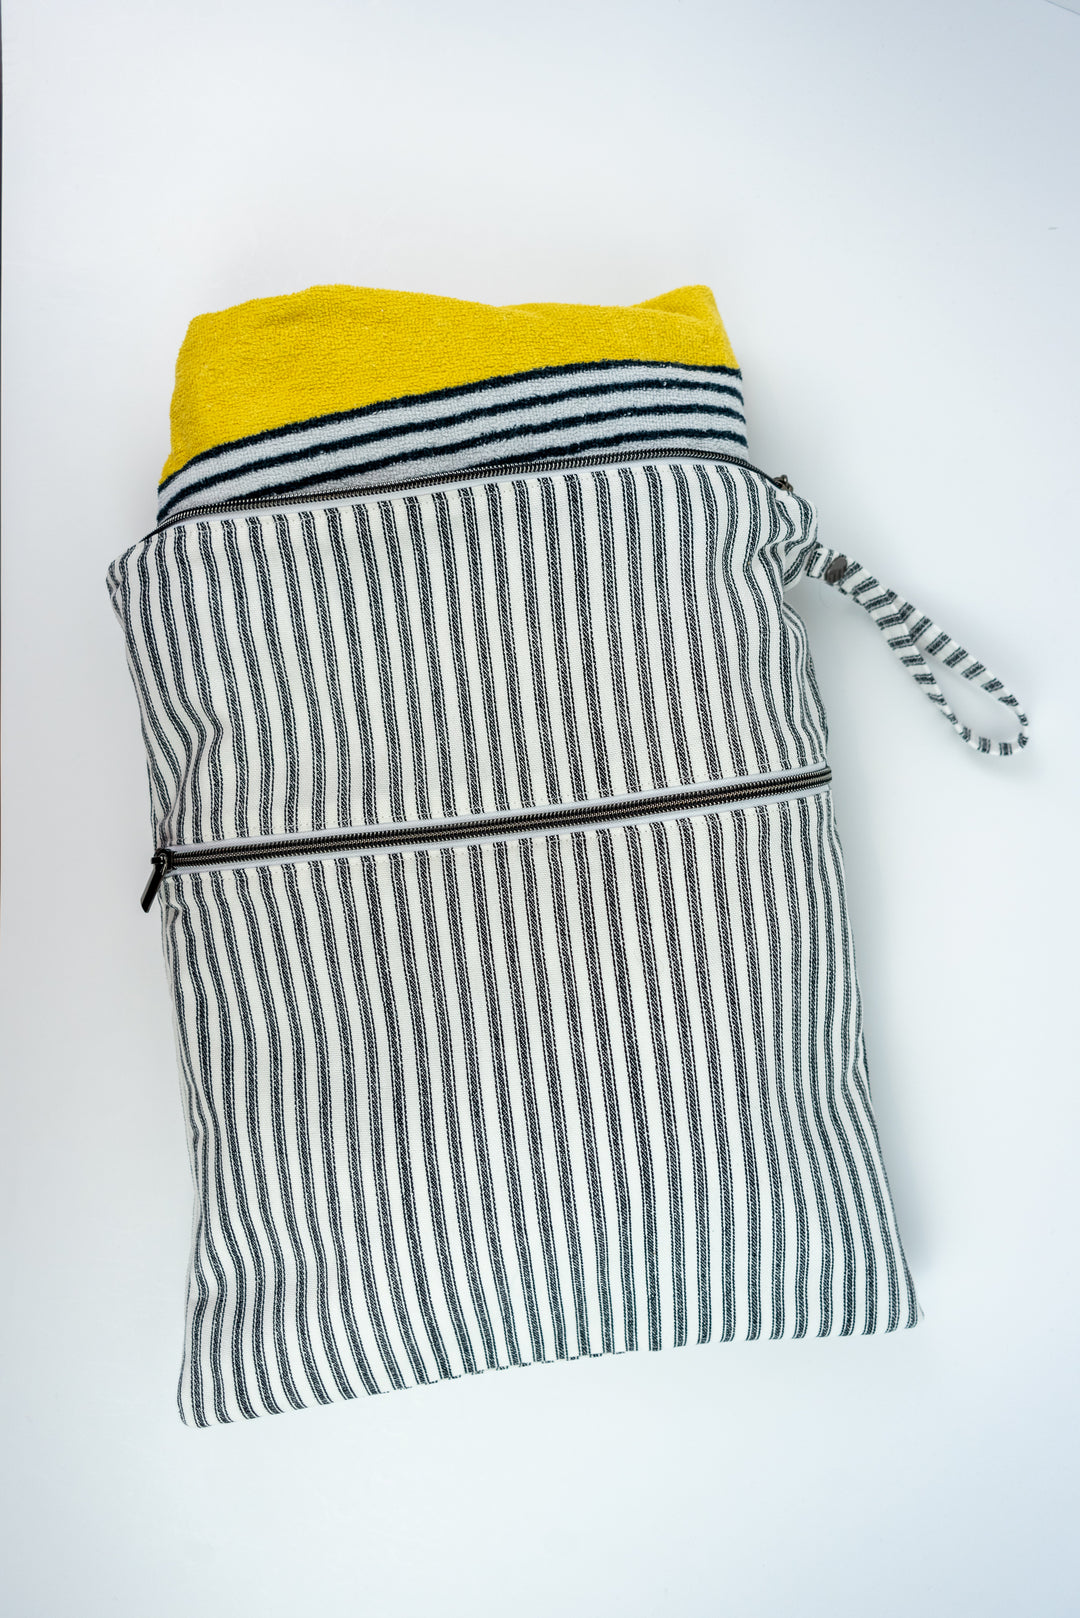 Large Deluxe Wet/Dry Bag - Black & White Striped